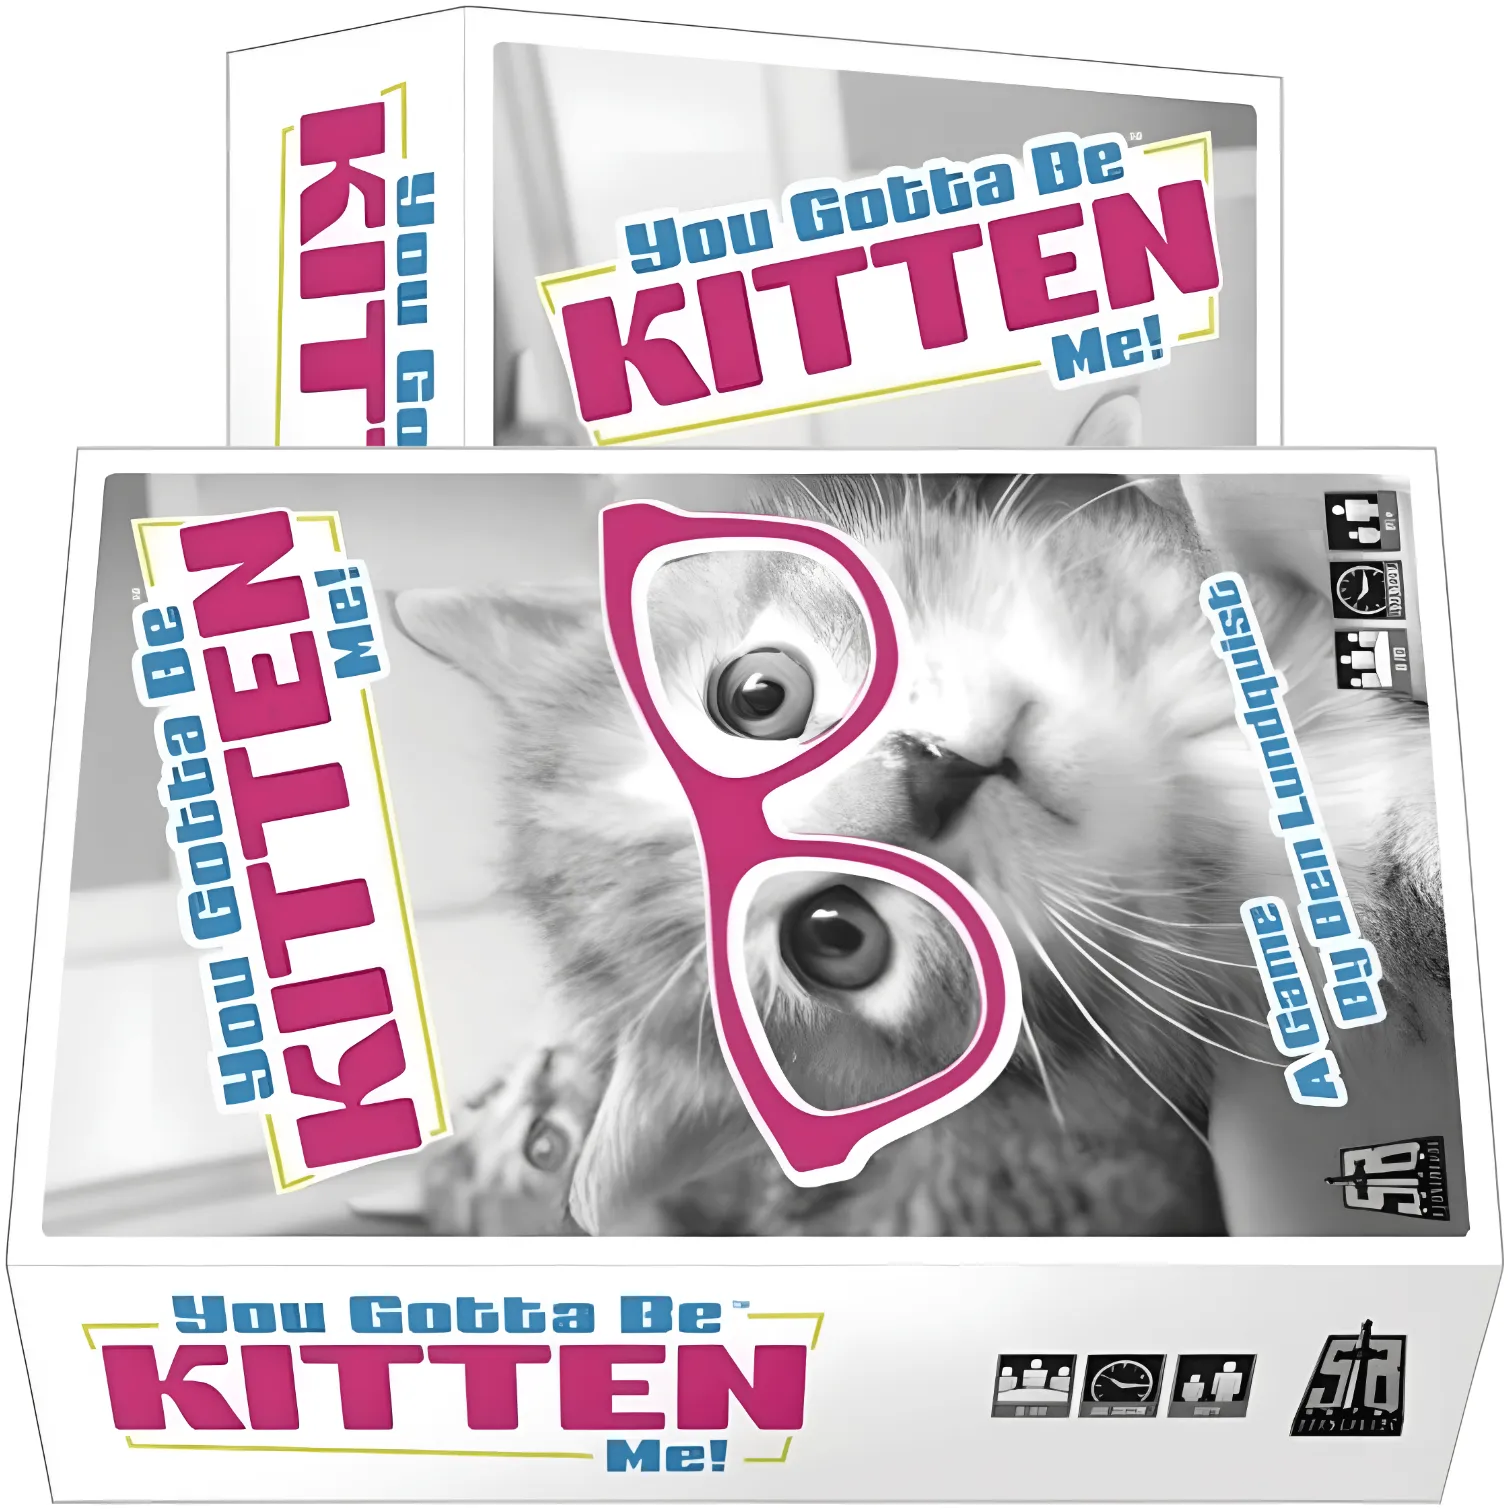 Free "You Gotta Be Kitten Me!" Board Game